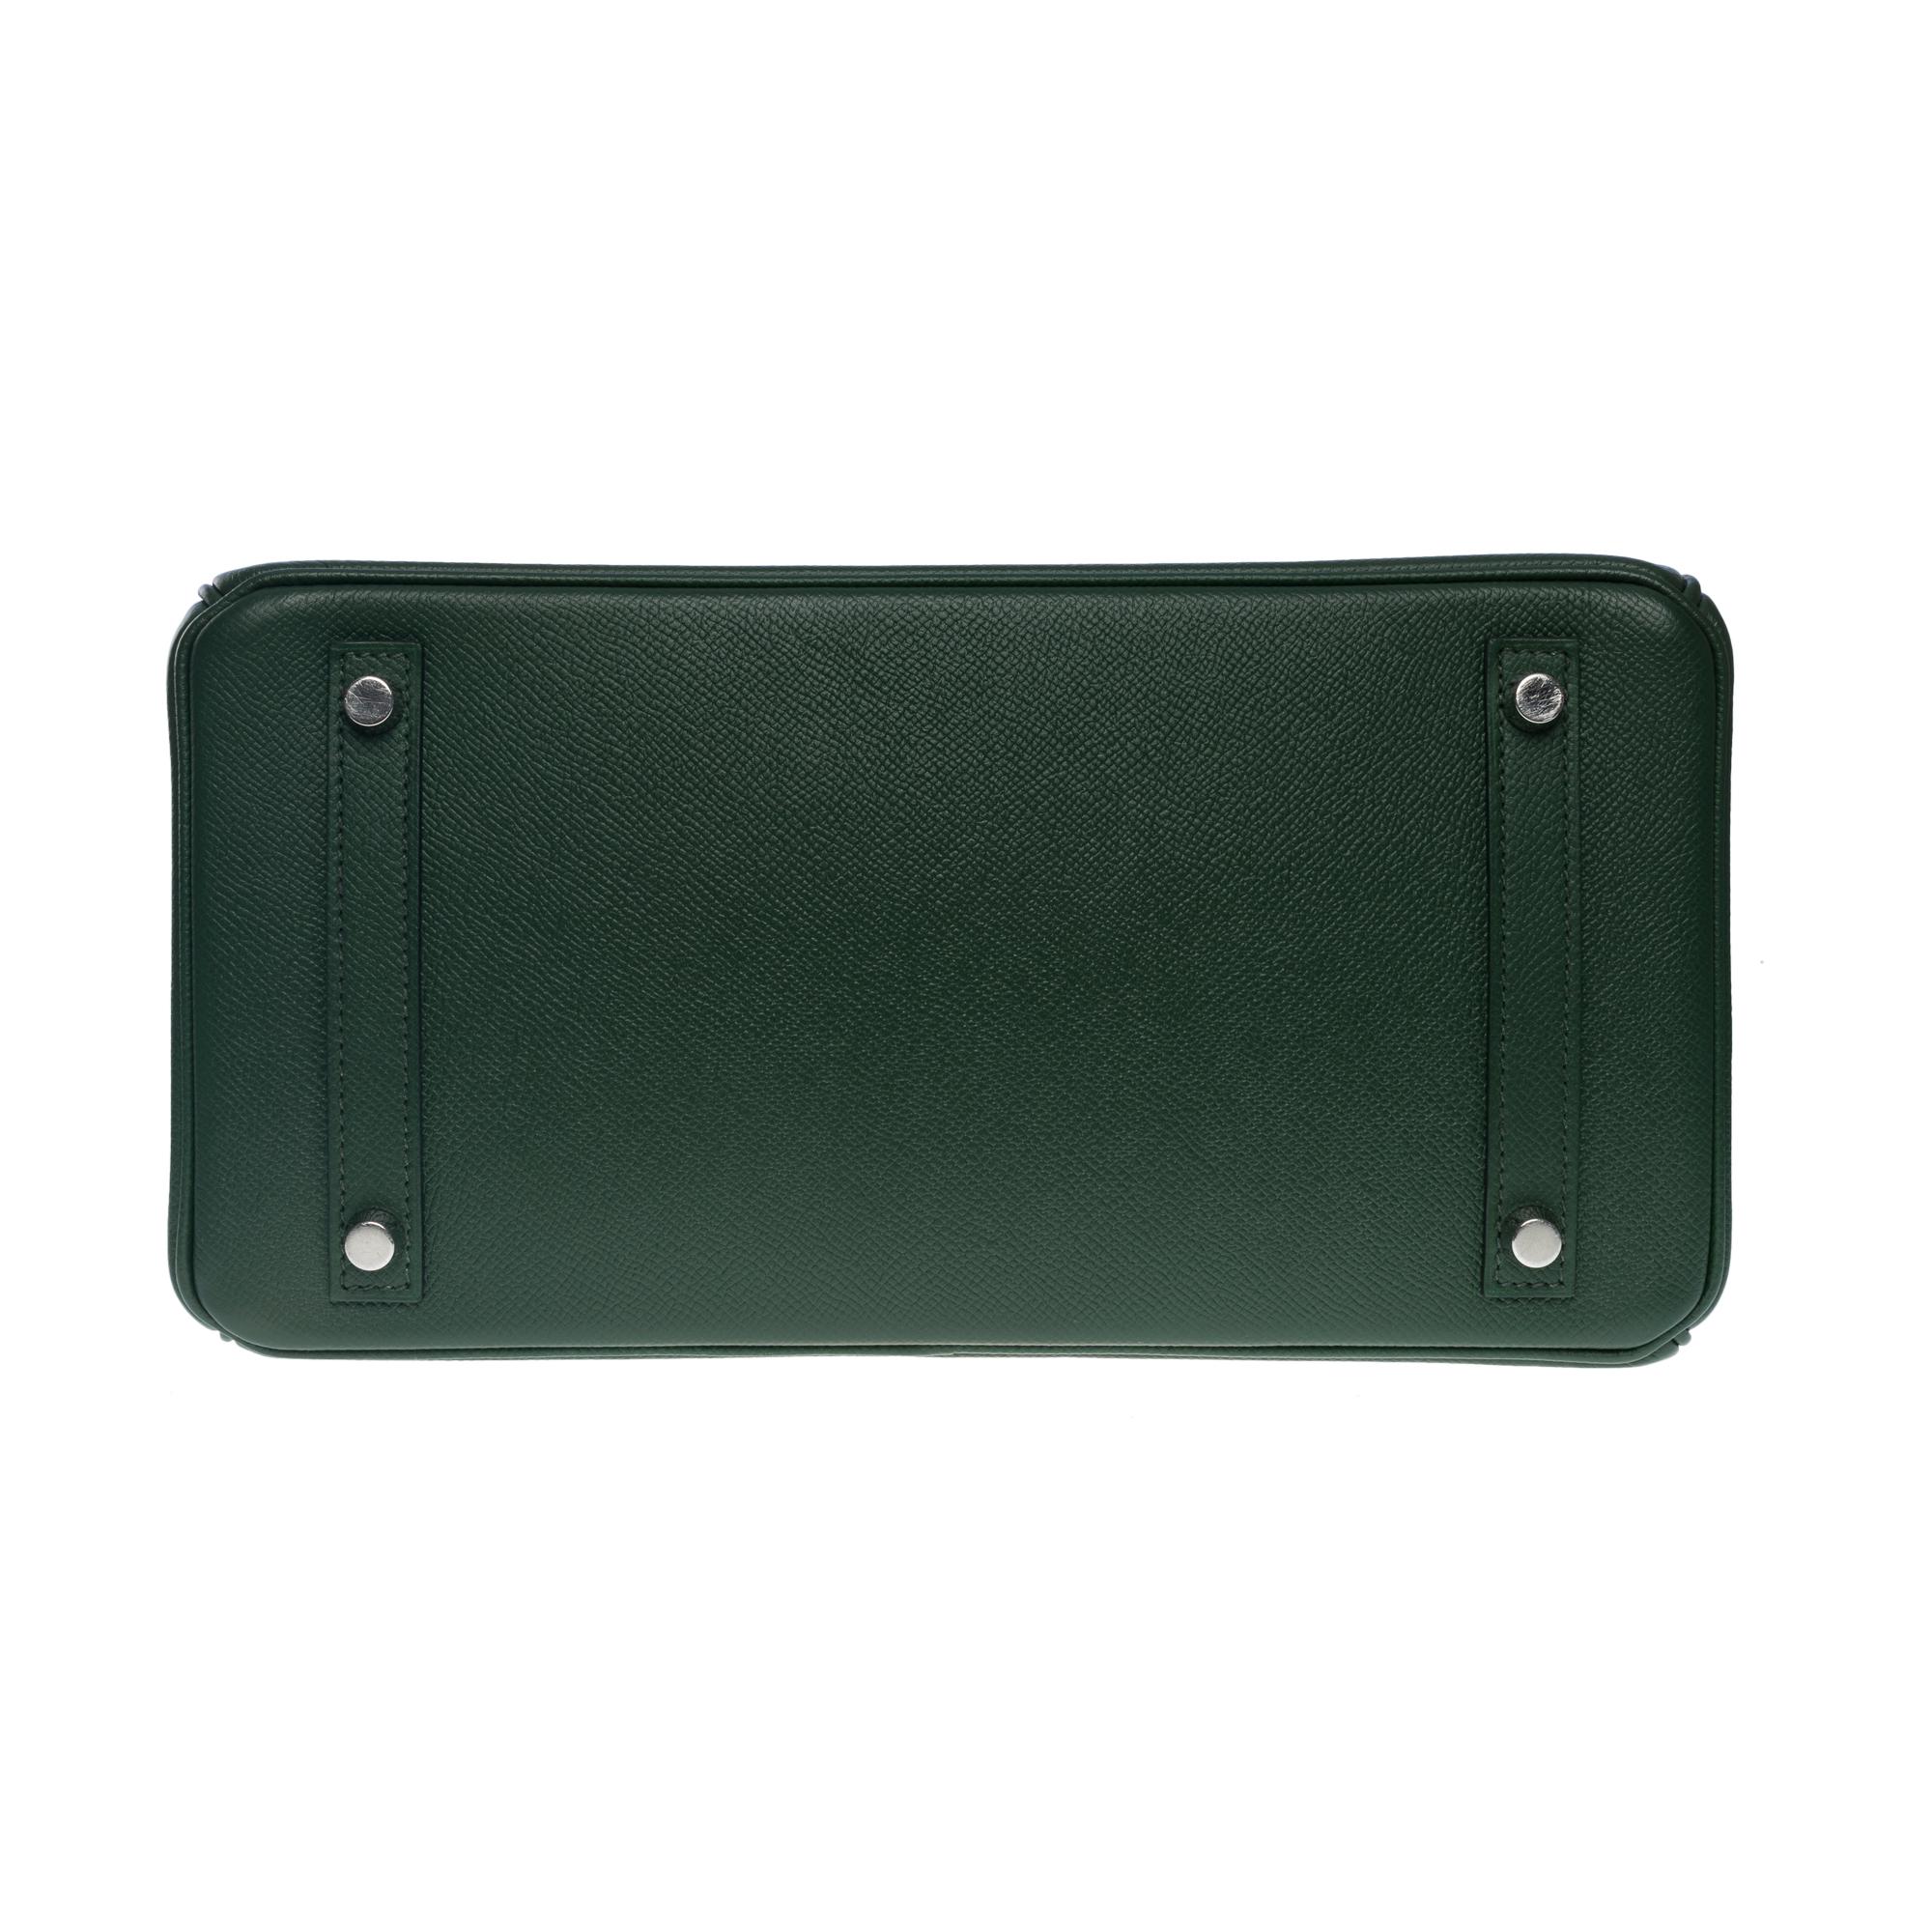 Amazing & Rare Hermès Birkin 30 handbag in Vert Anglais Epsom leather, SHW 5